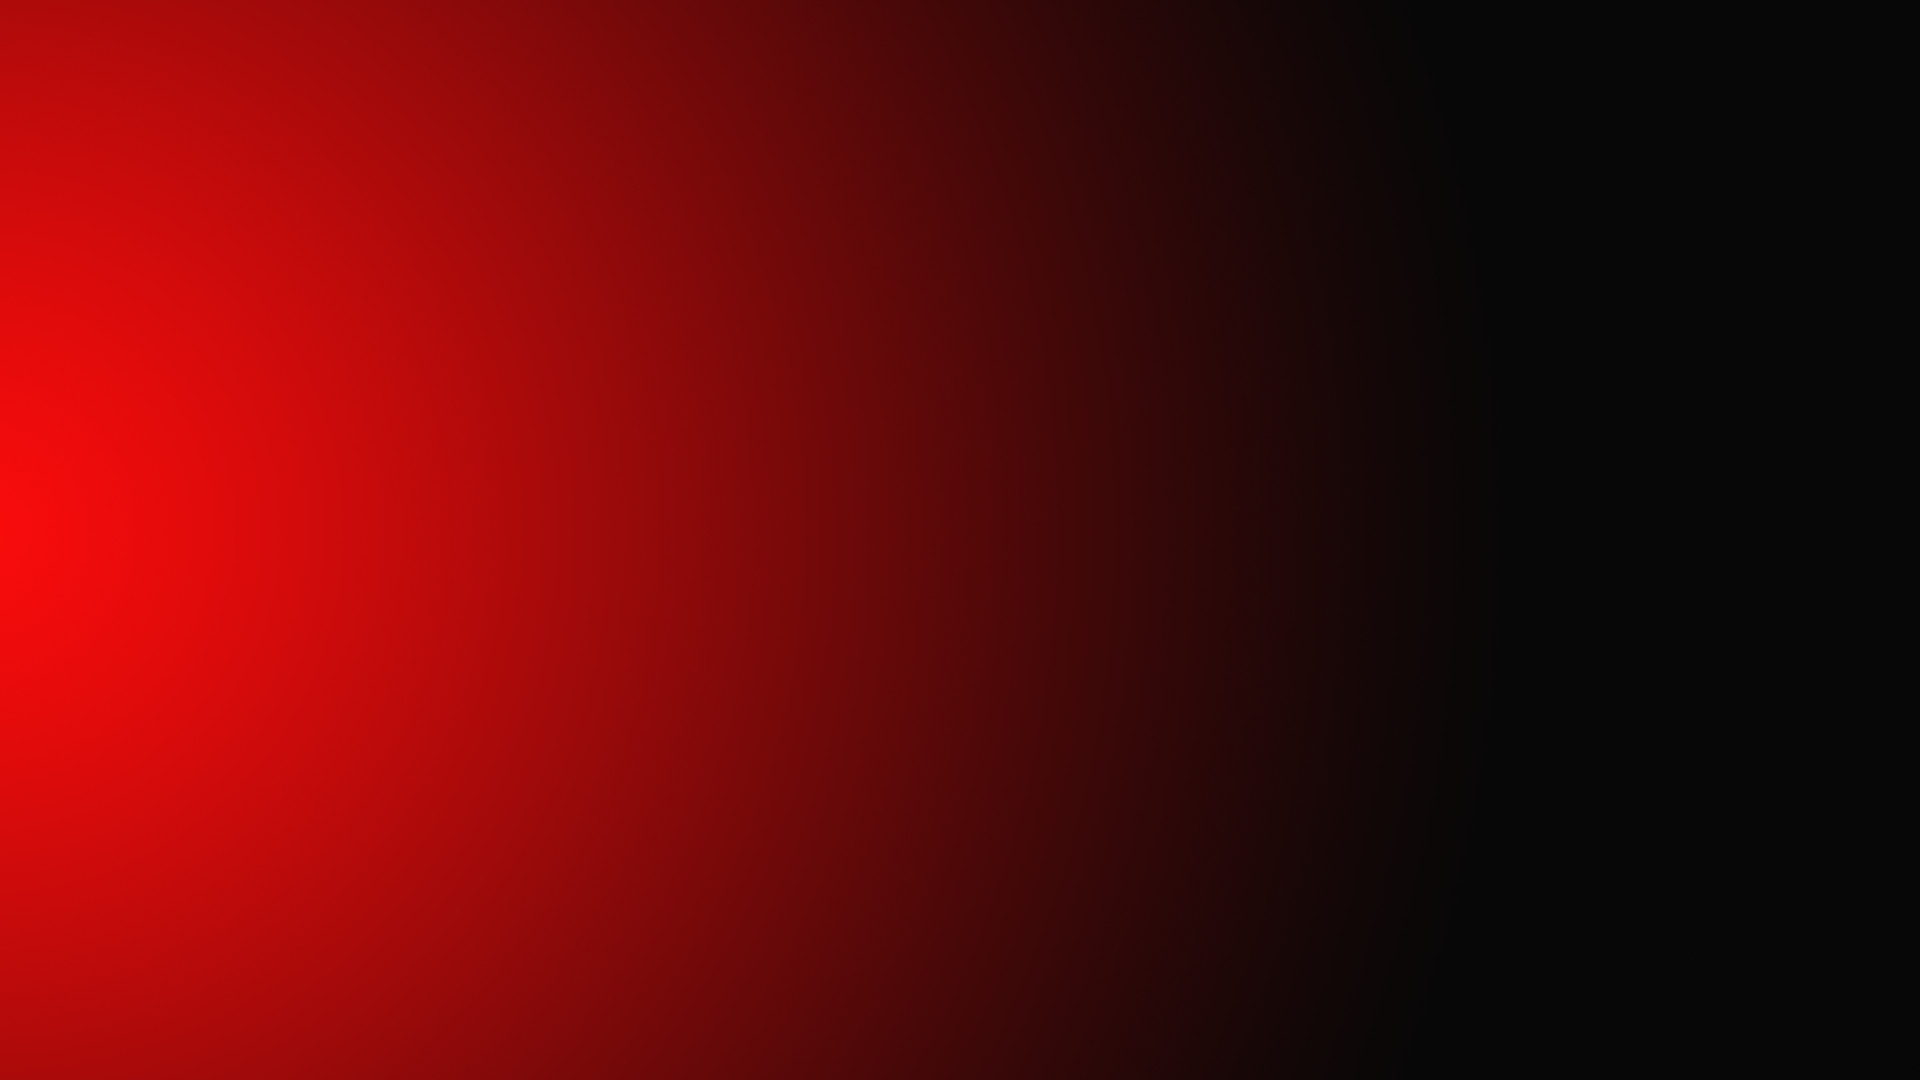 1920x1080 Red And Black Background 21 Desktop Background